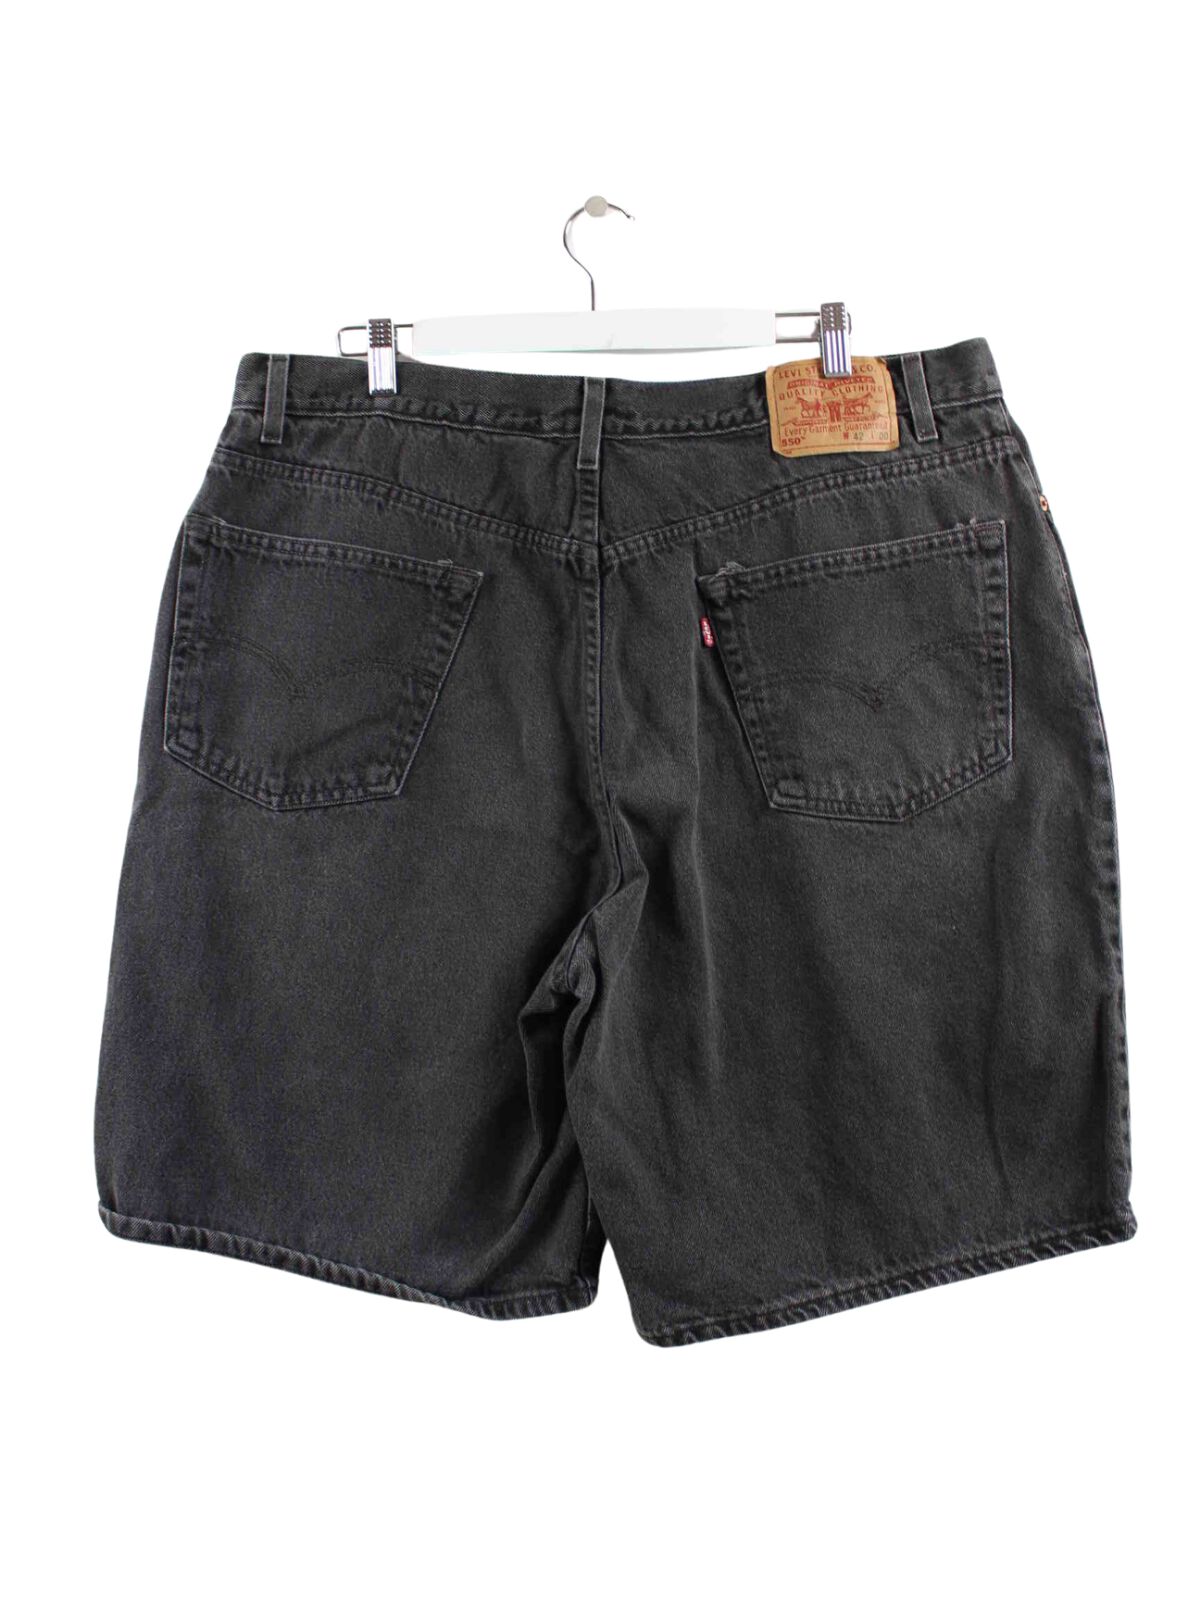 Levi's 550 Shorts Grau W42 (back image)